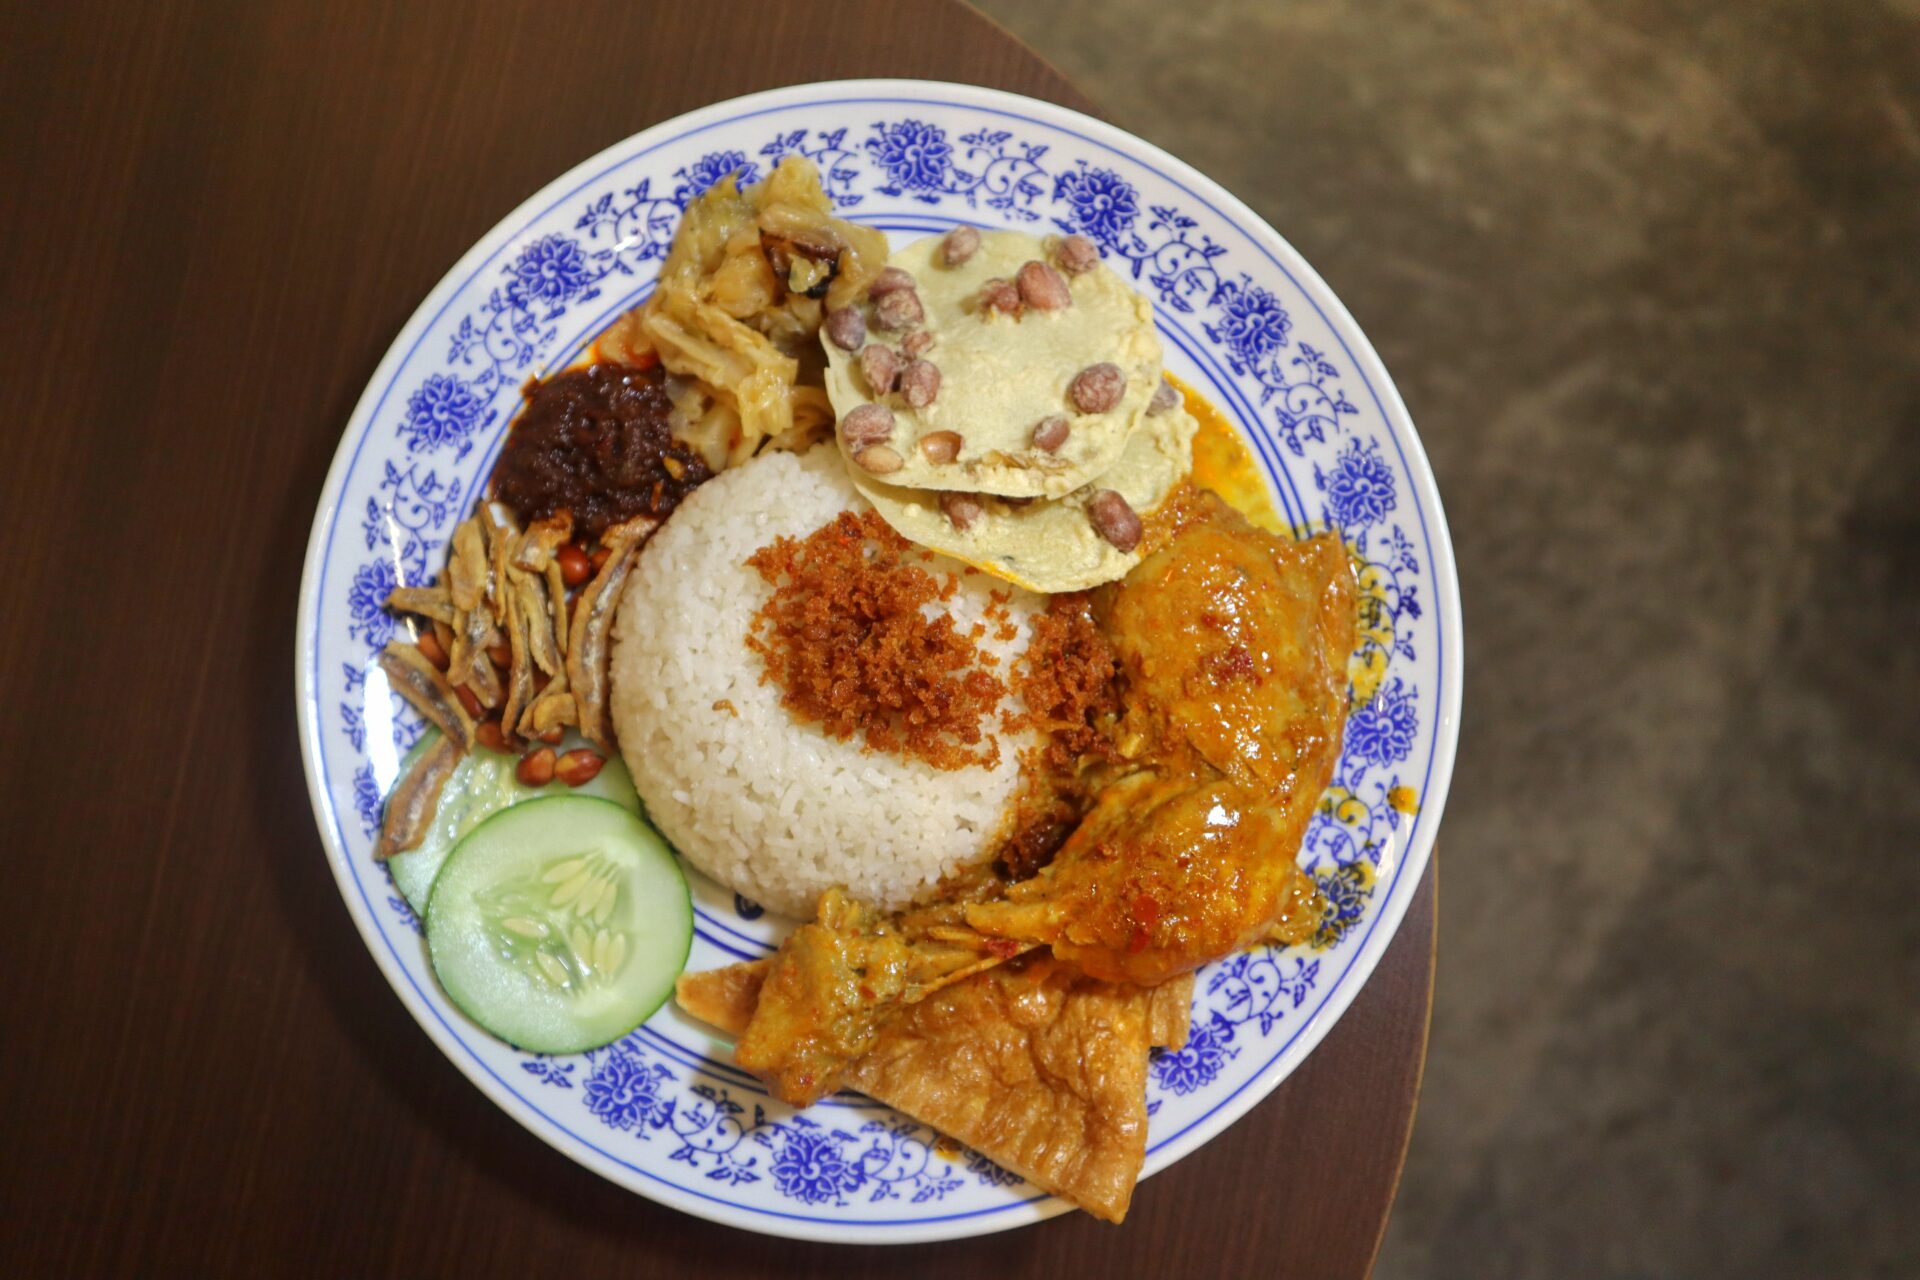 singapore jiak - grandma's nasi lemak